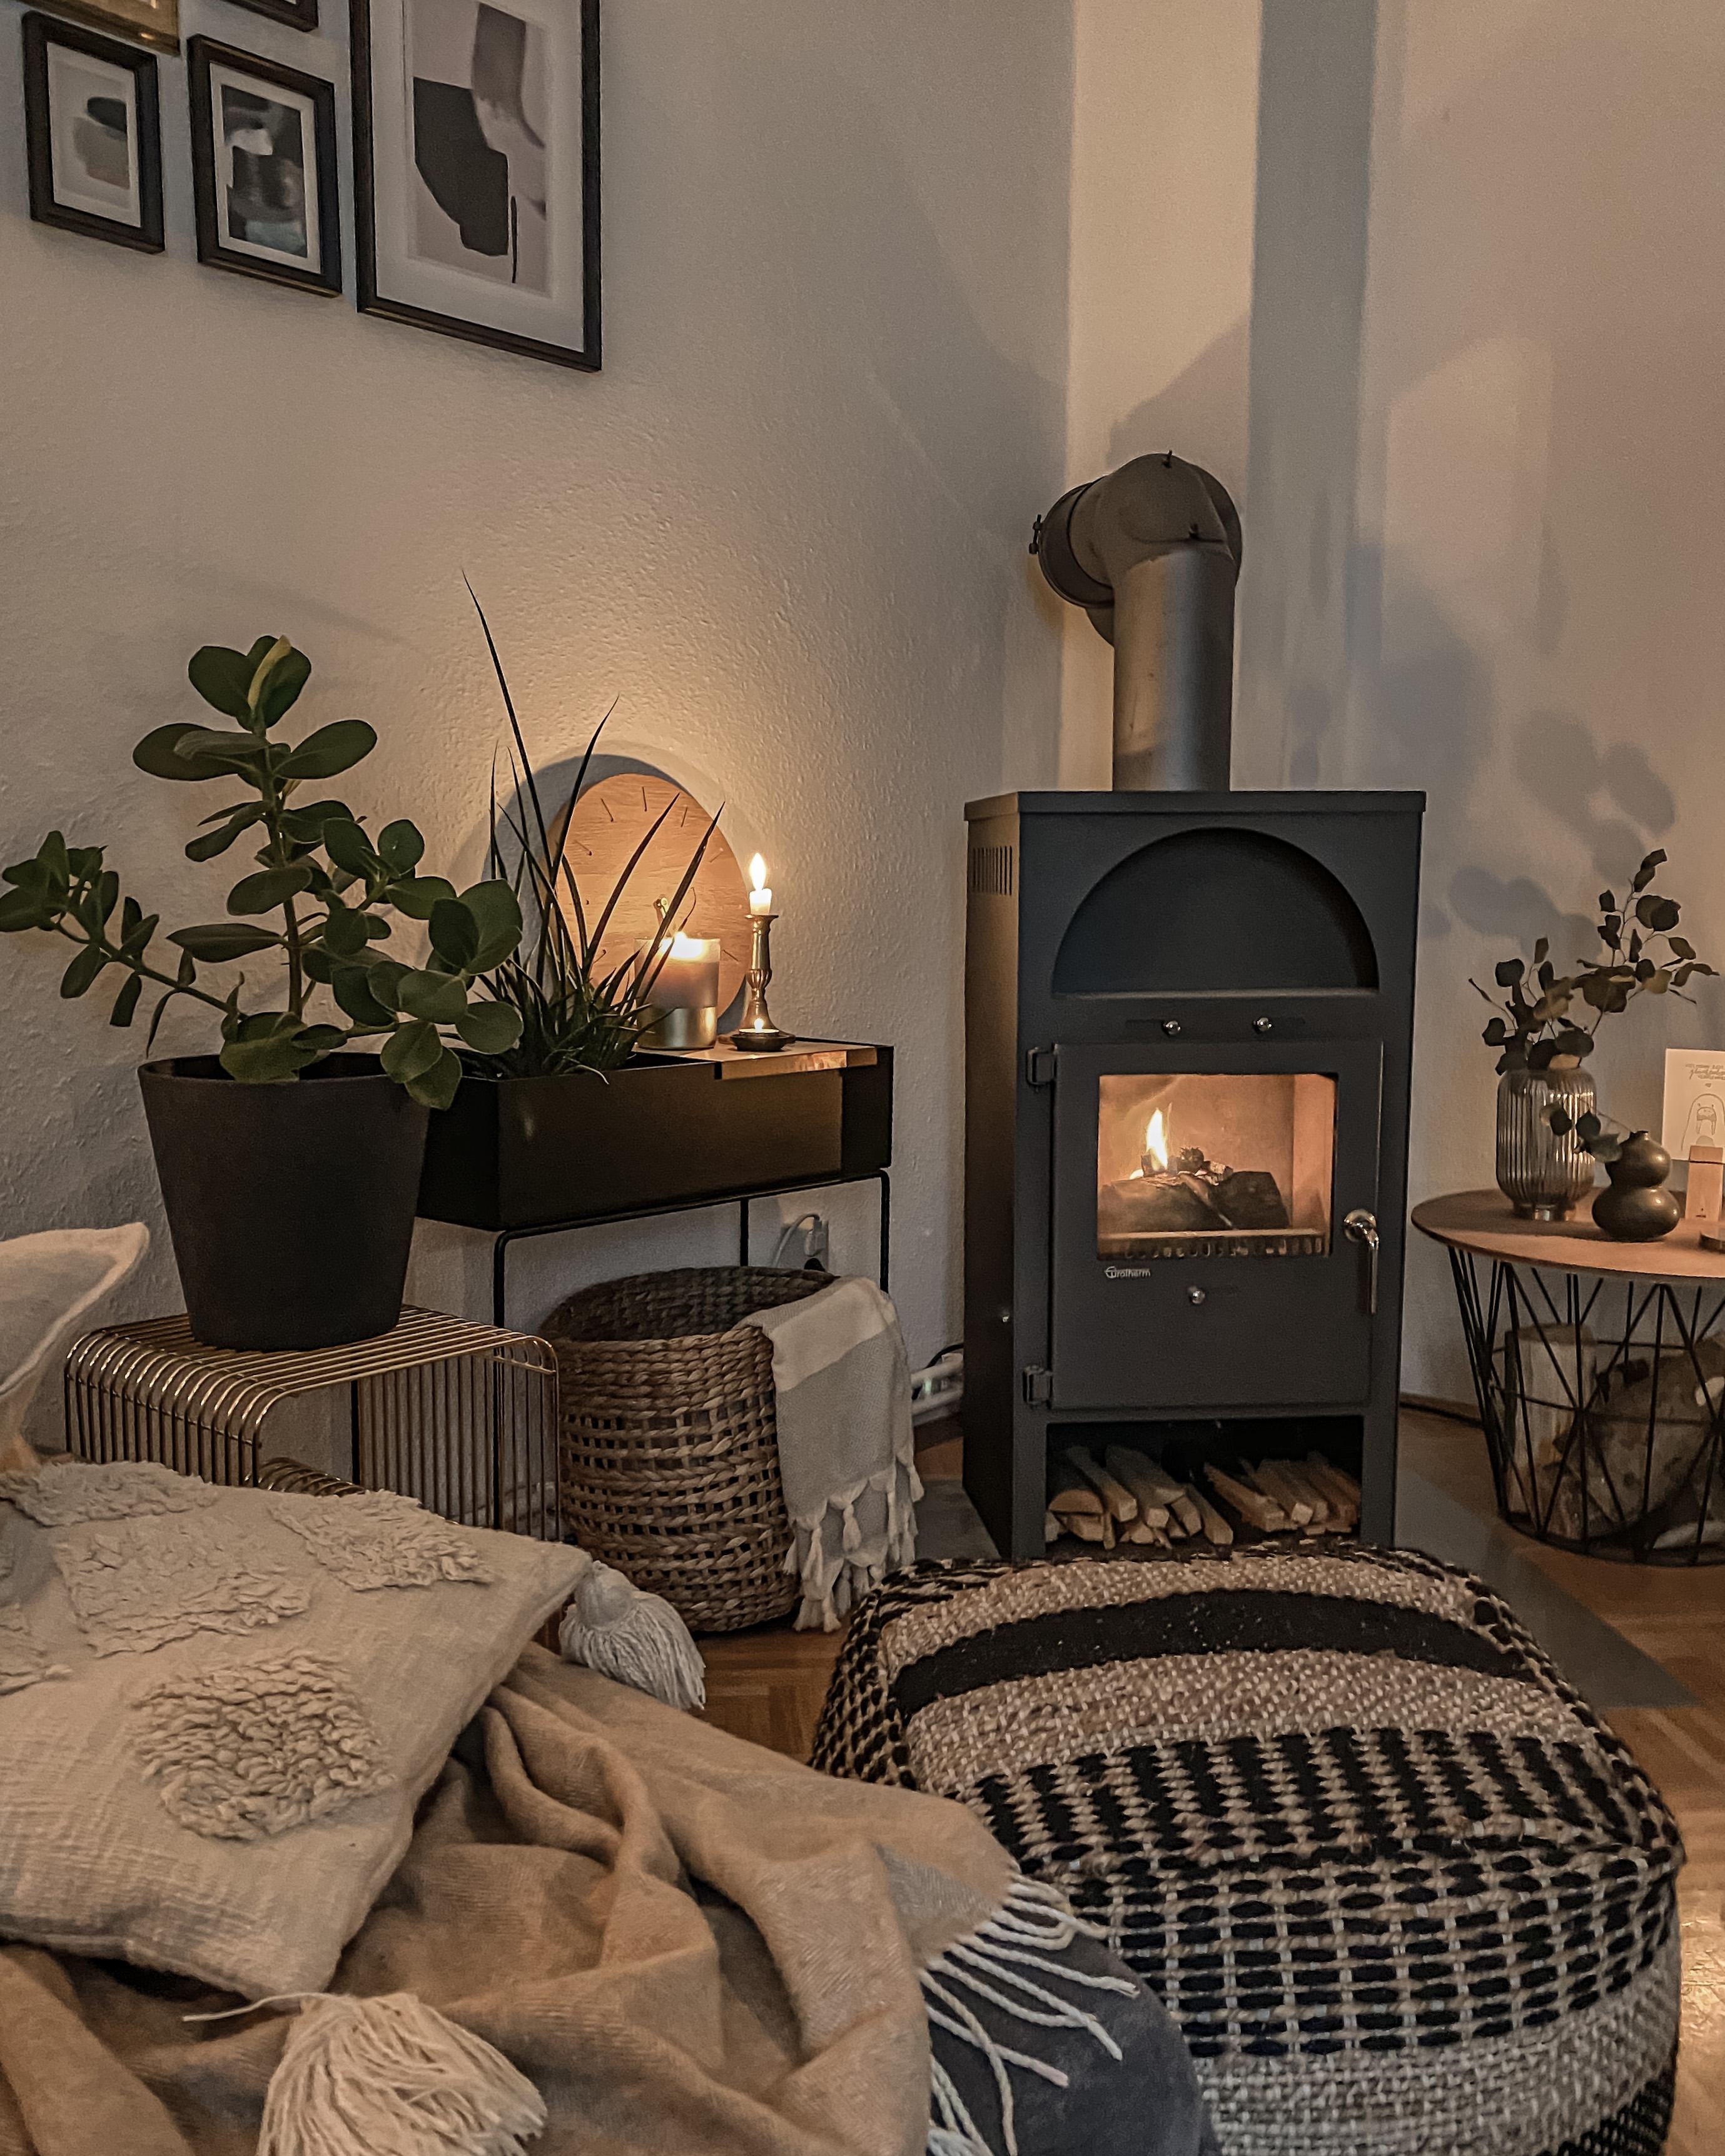 Cozy vibes✨ #kamin #fireplace #kerzen #autumnvibes #livingroom #wohnzimmerideen #kissen #wolldecke #korb #plantbox